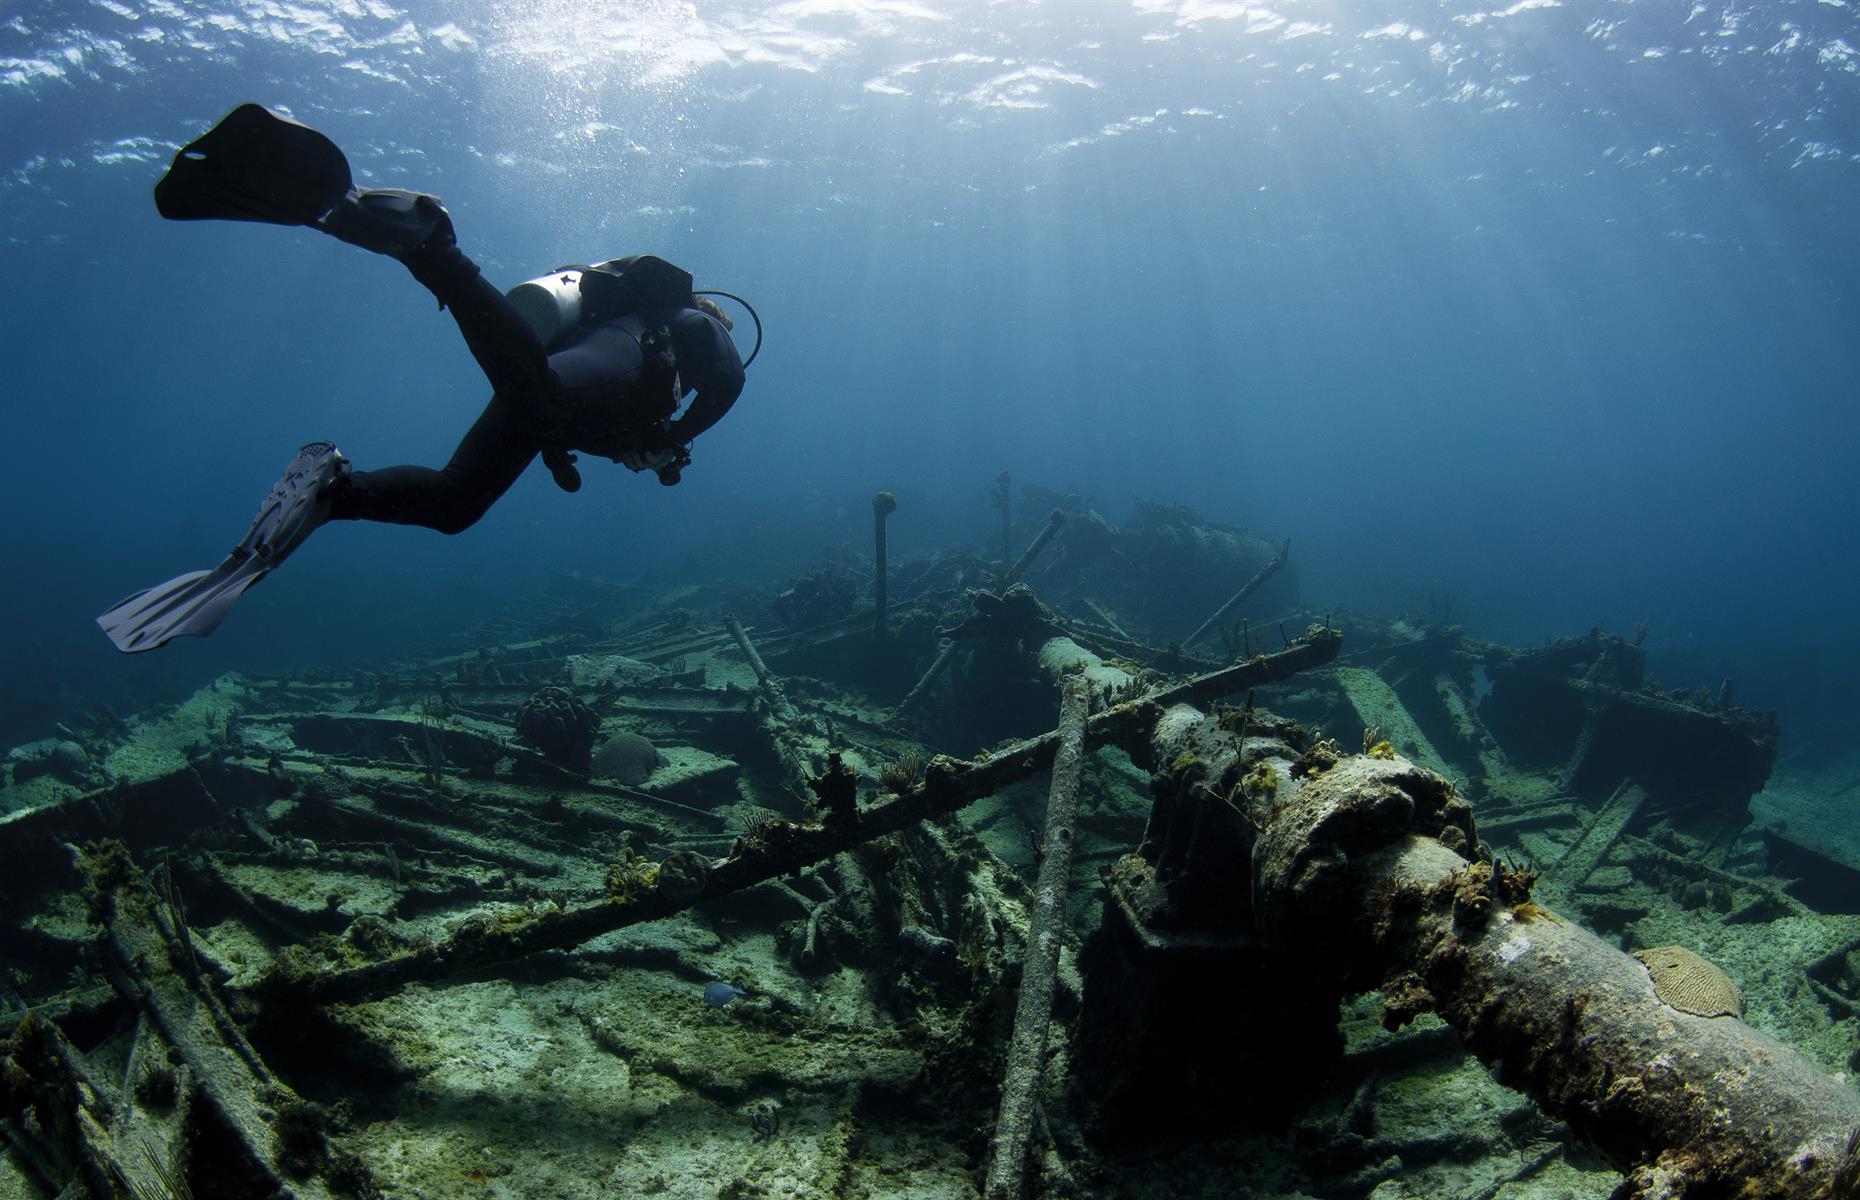 Delaware: sunken treasures from a shipwreck